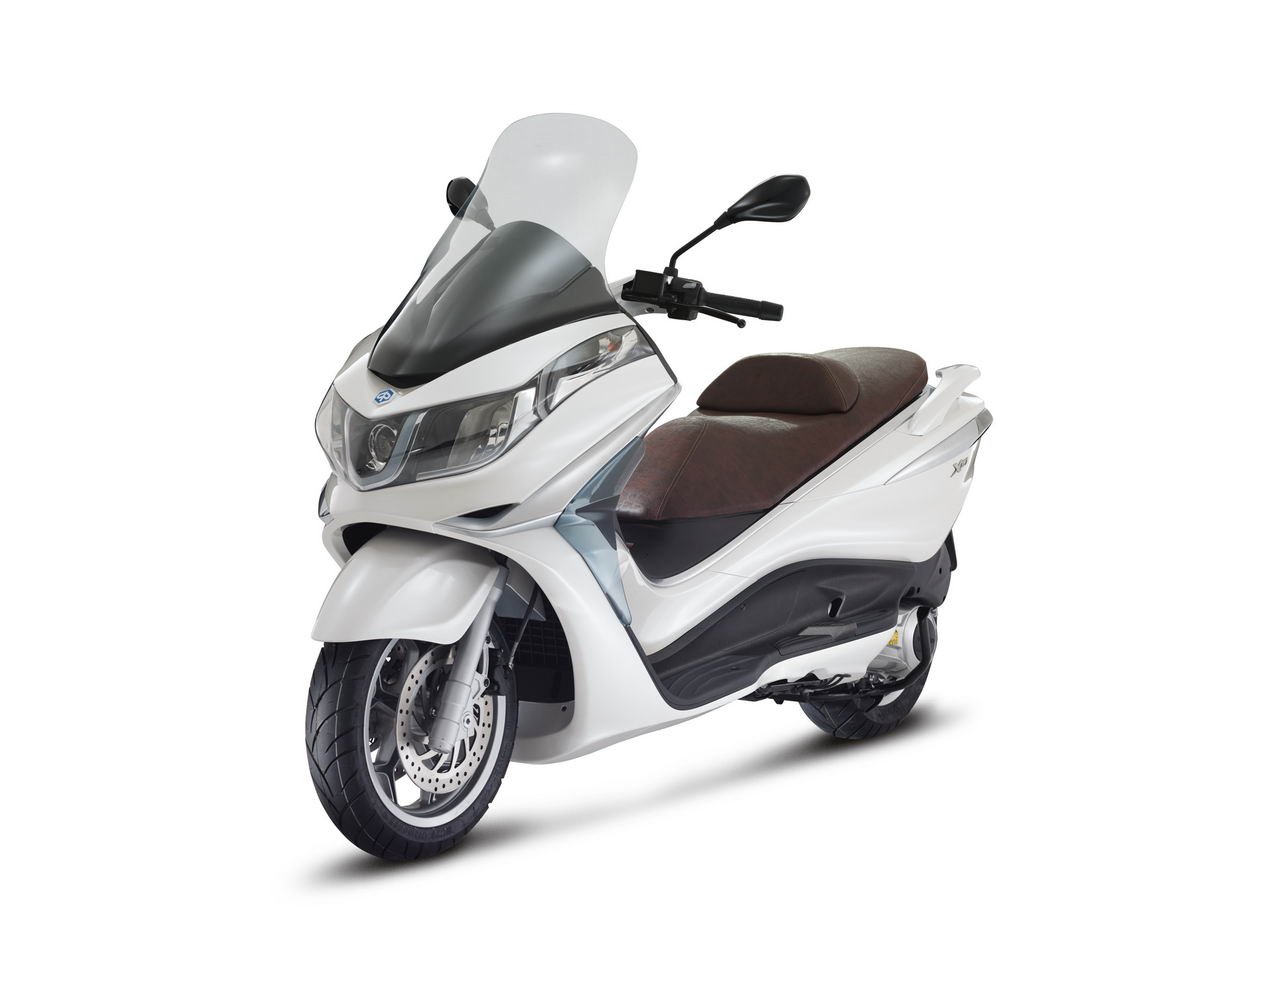 Listino Piaggio X 10 Executive 500 Scooter oltre 300 - image 15145_piaggio-x10-executive-500 on https://moto.motori.net